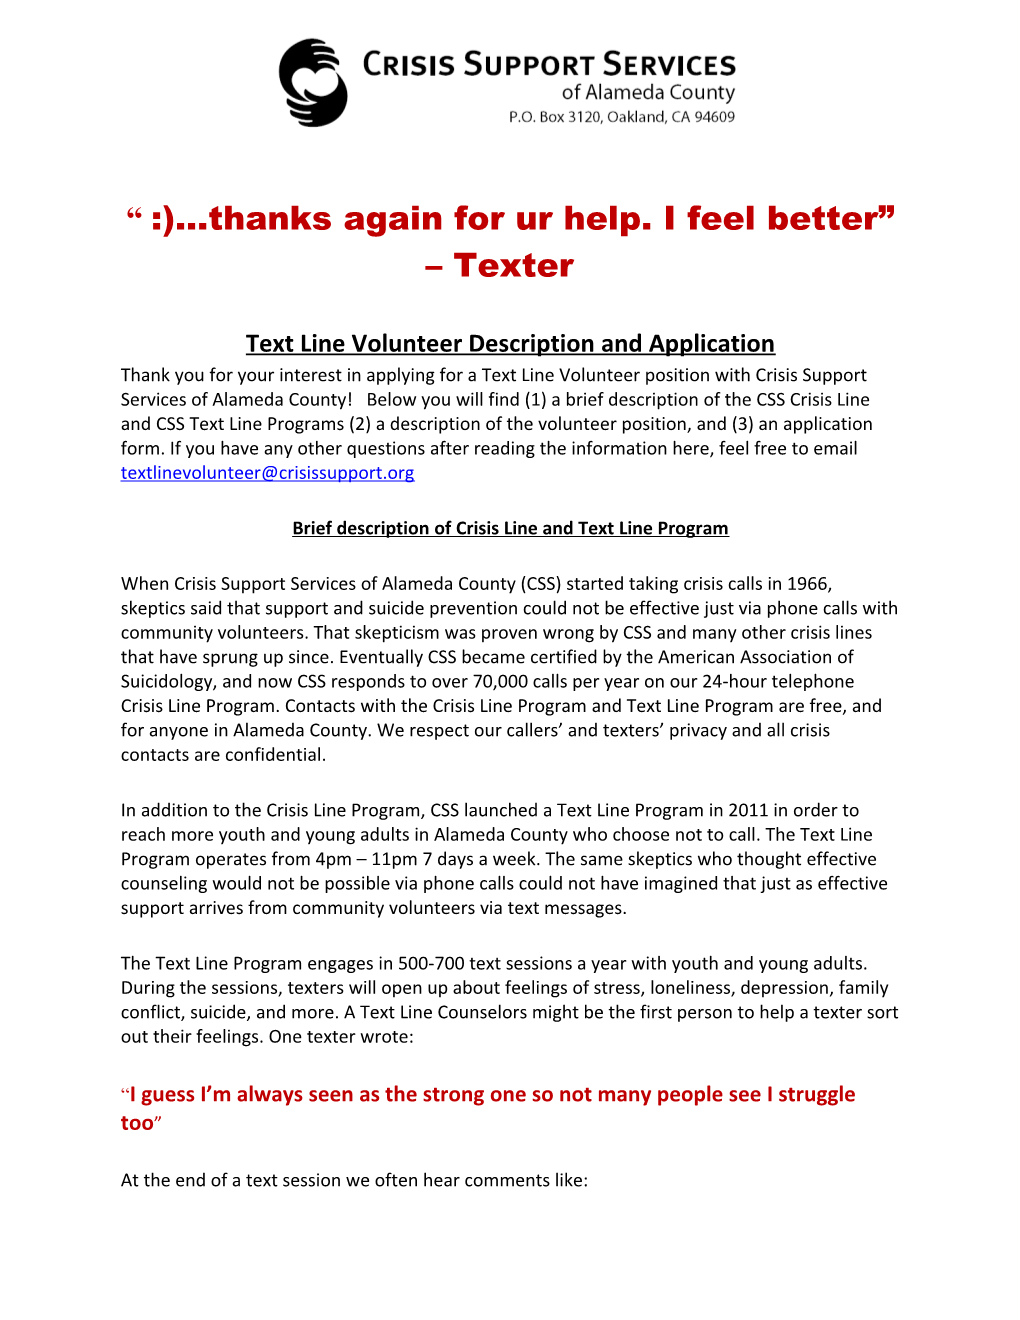 Text Line Volunteer Application